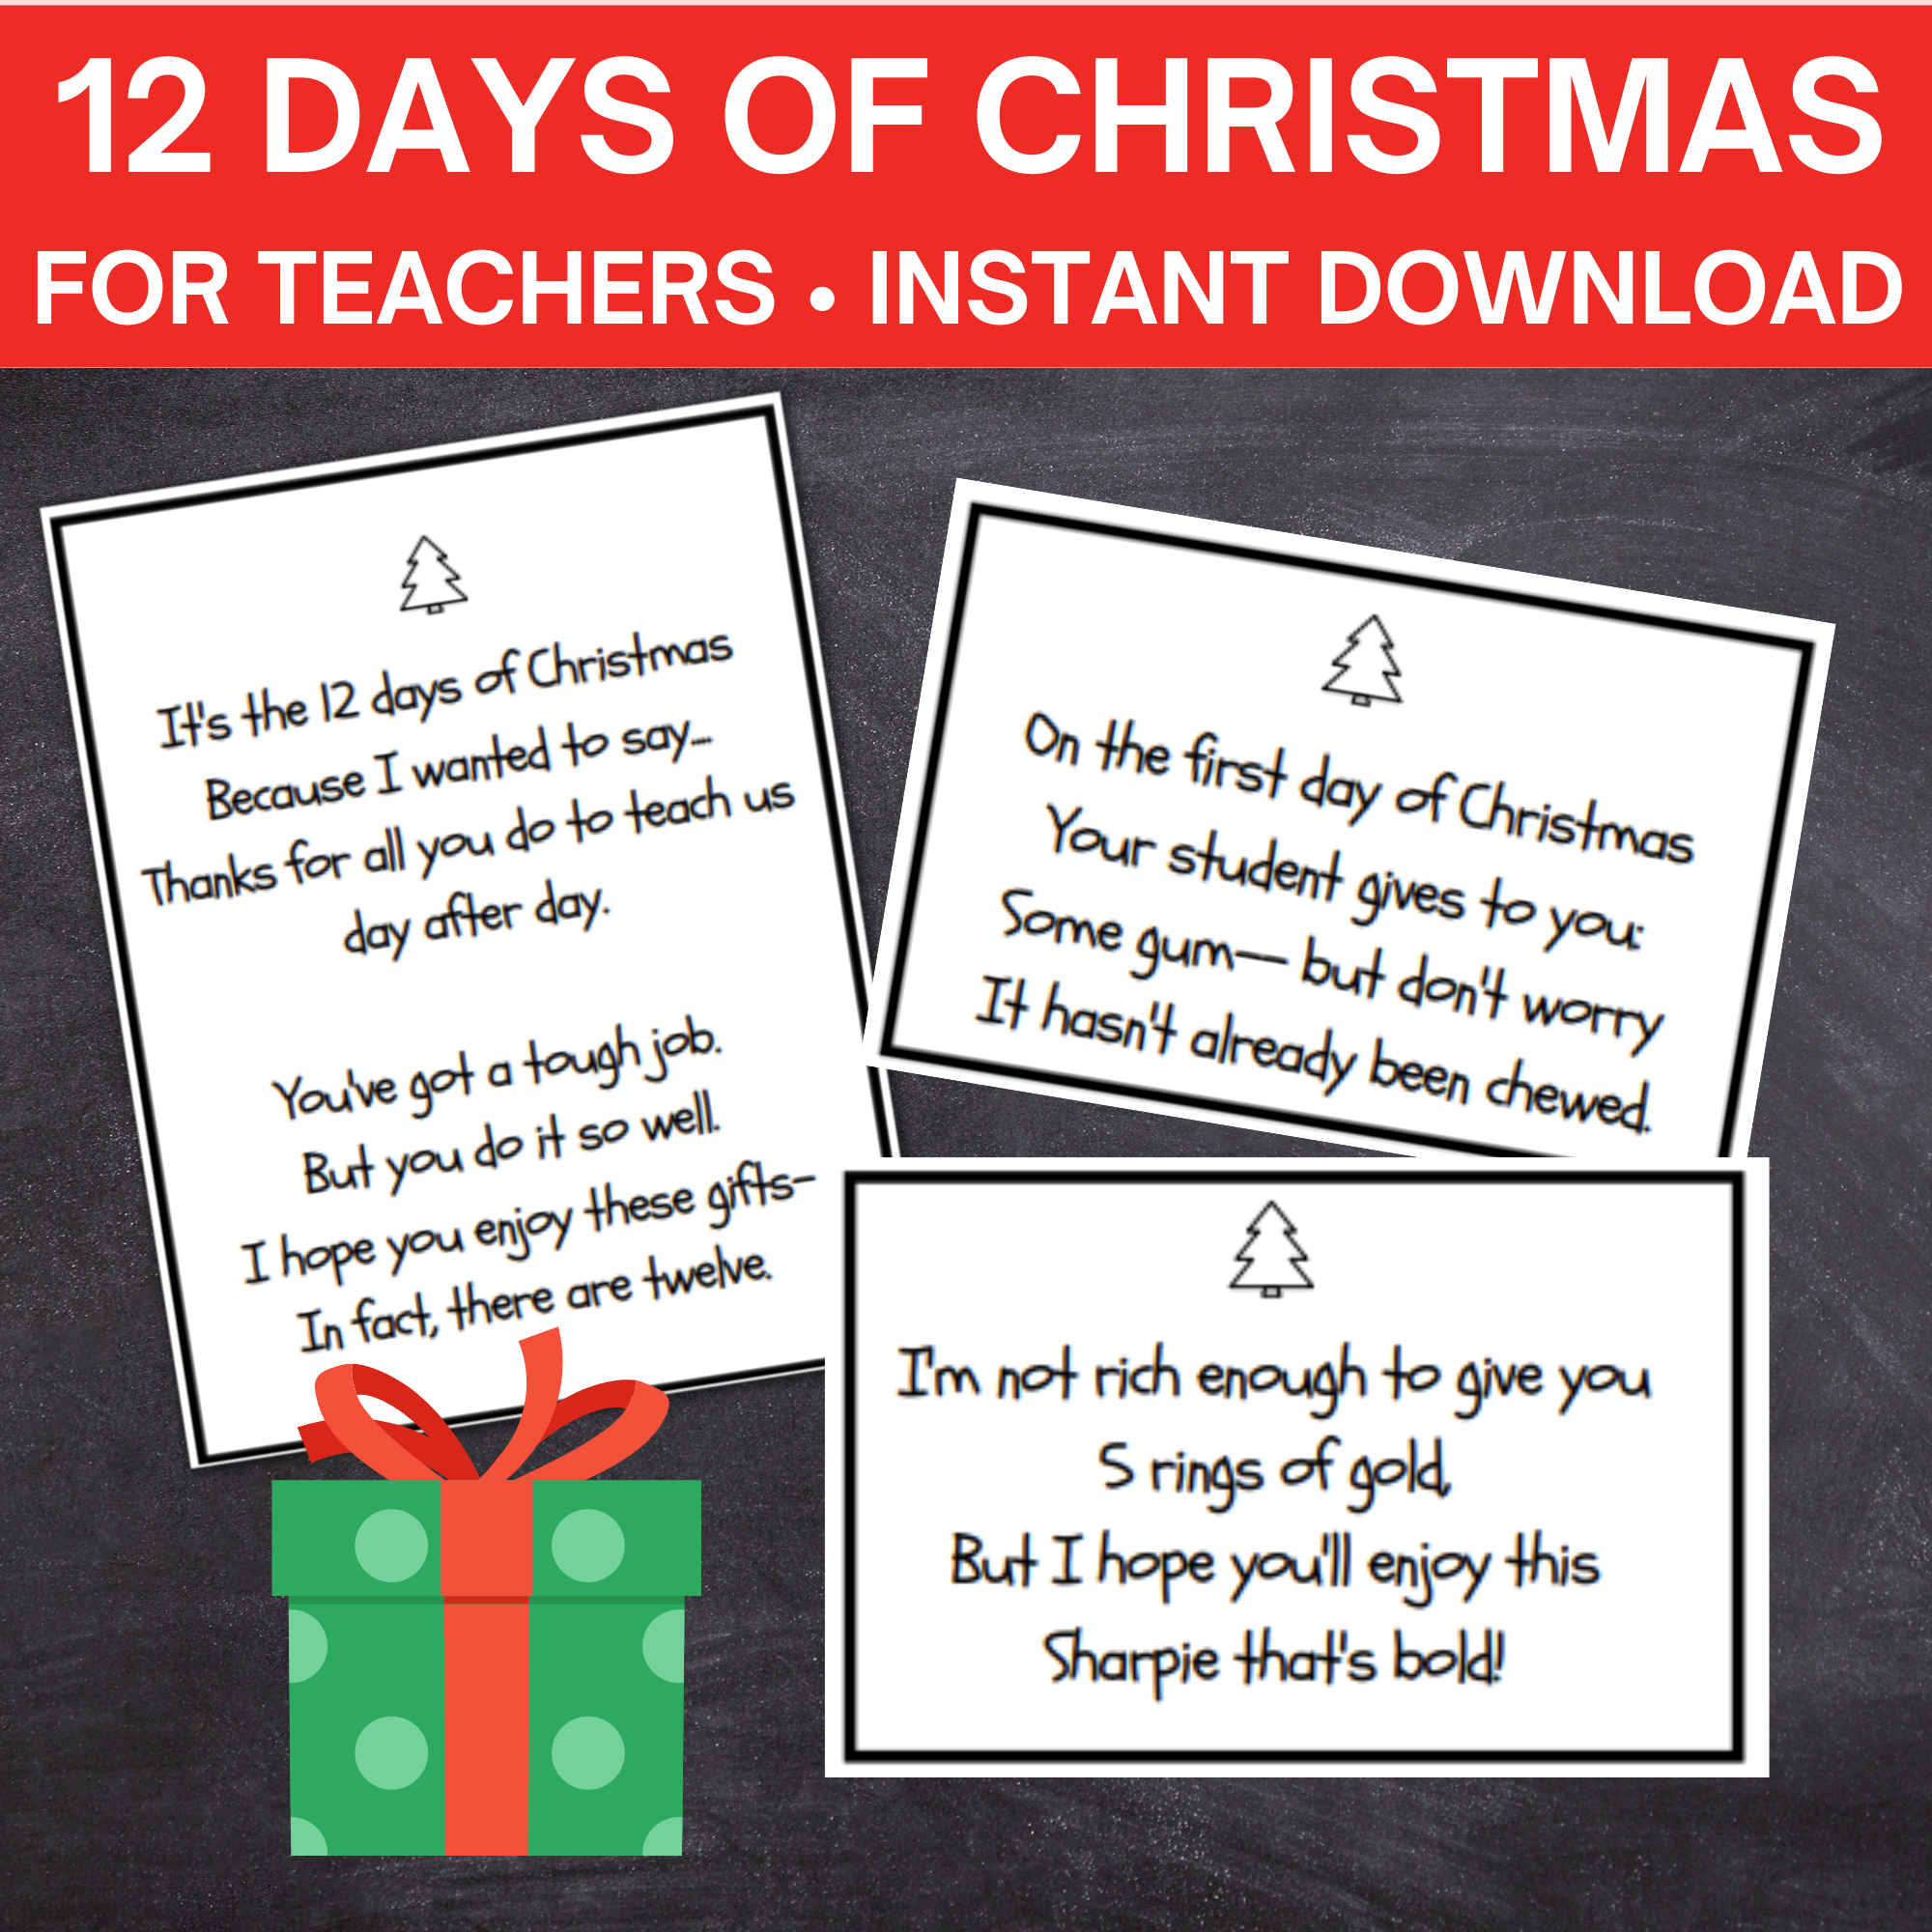 12 Days of Christmas Gifts For Teachers – So Festive!